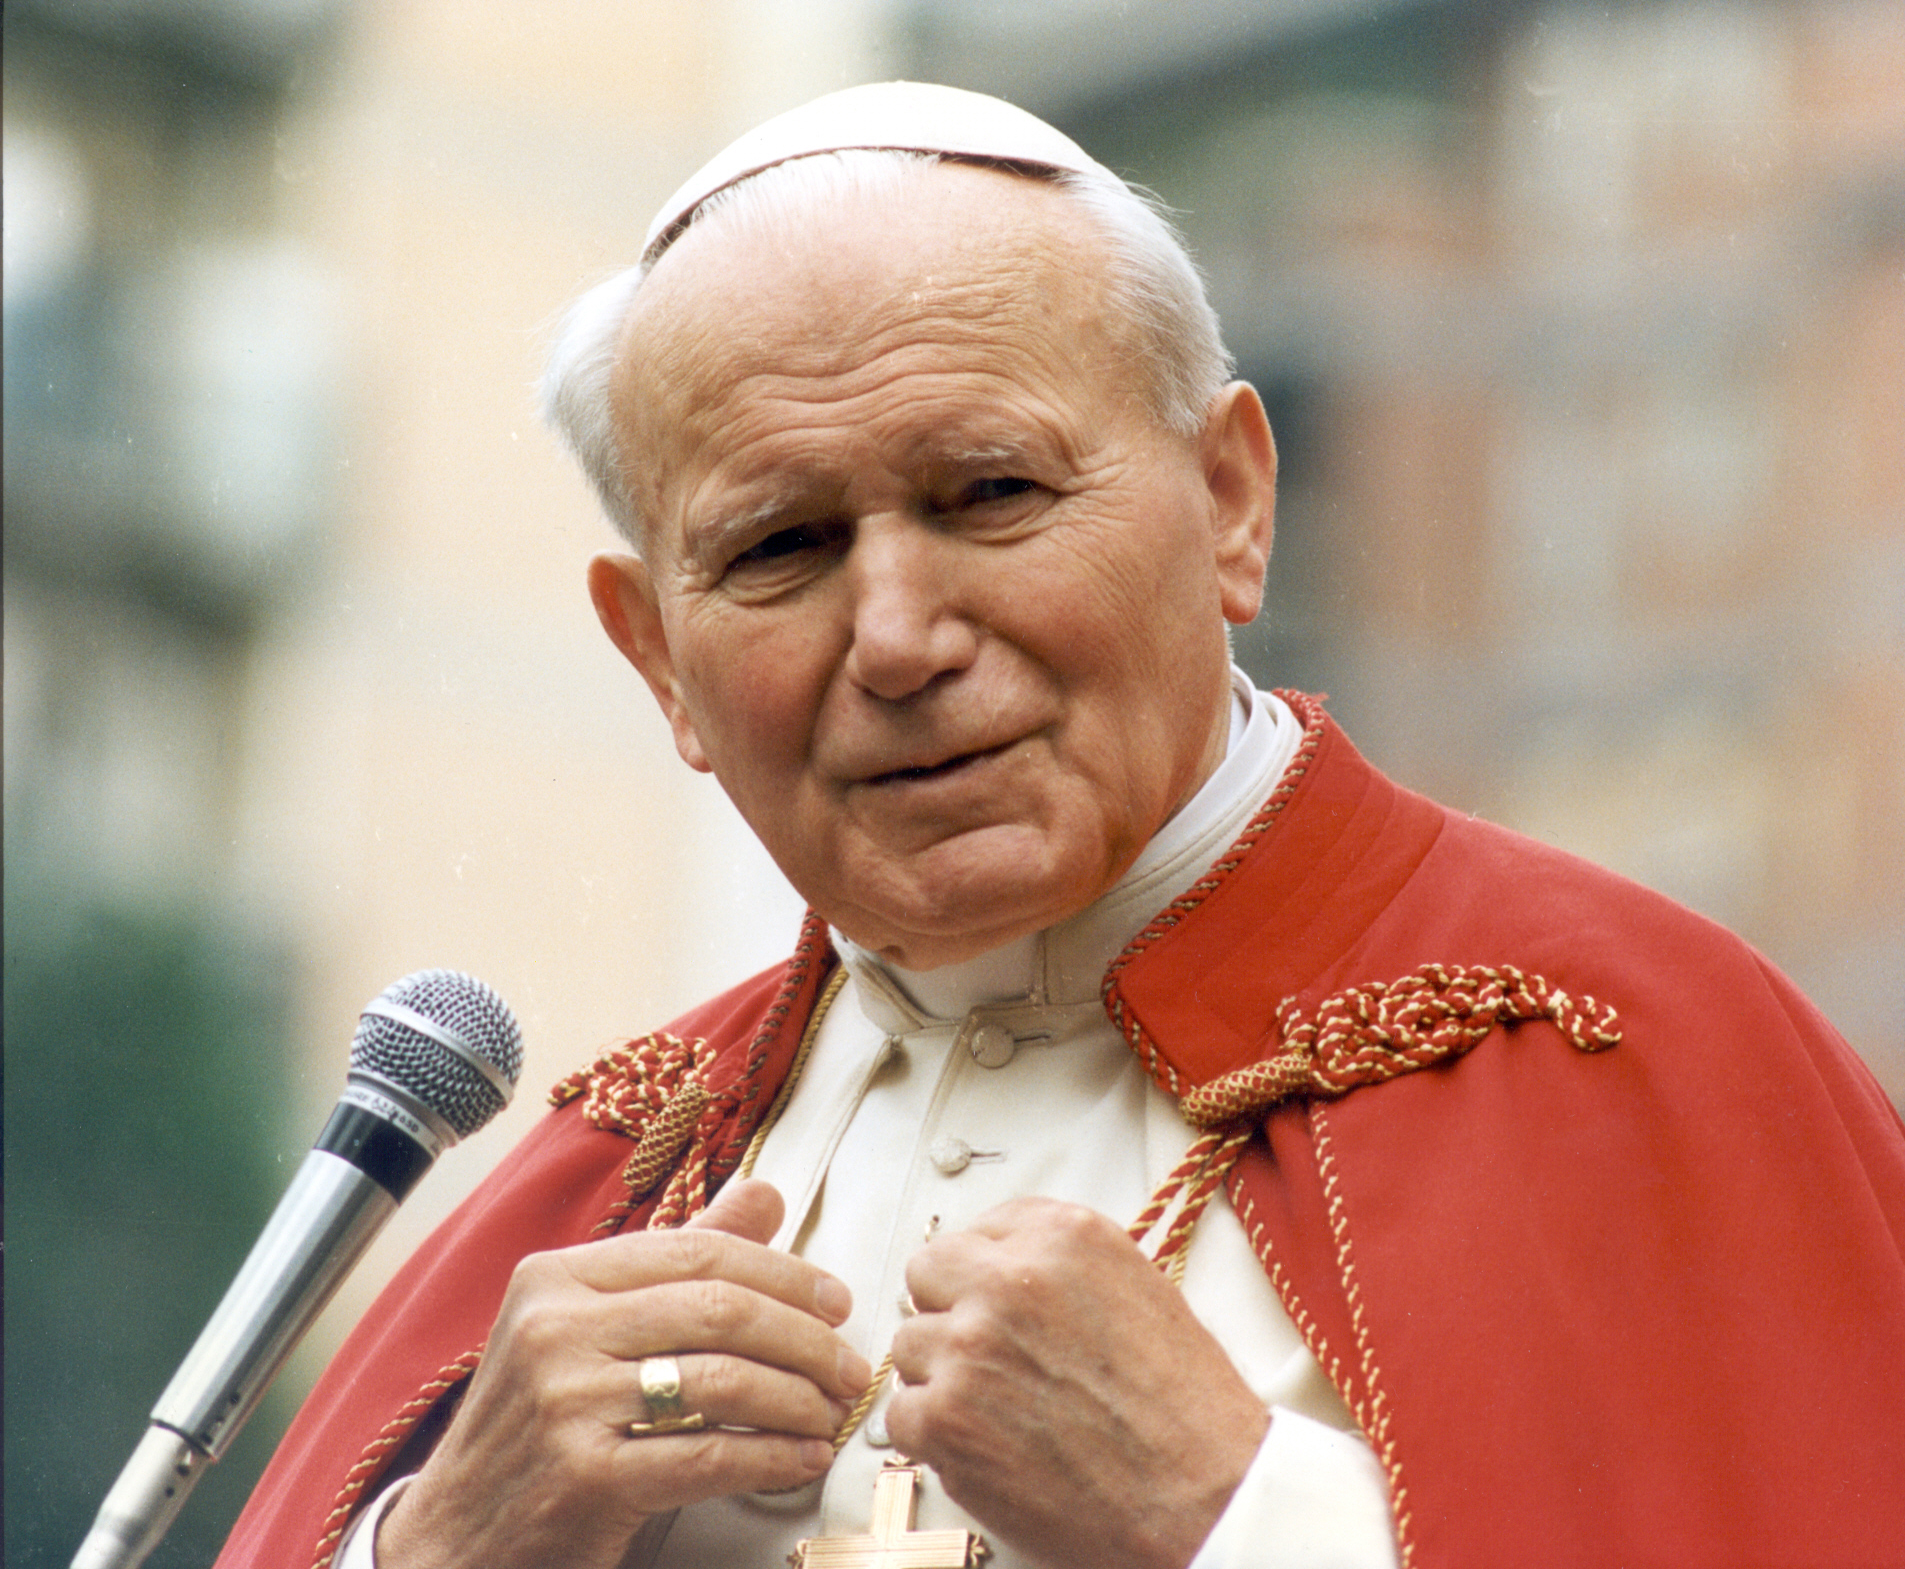 Pope John Paul II on the school’s role in catechesis